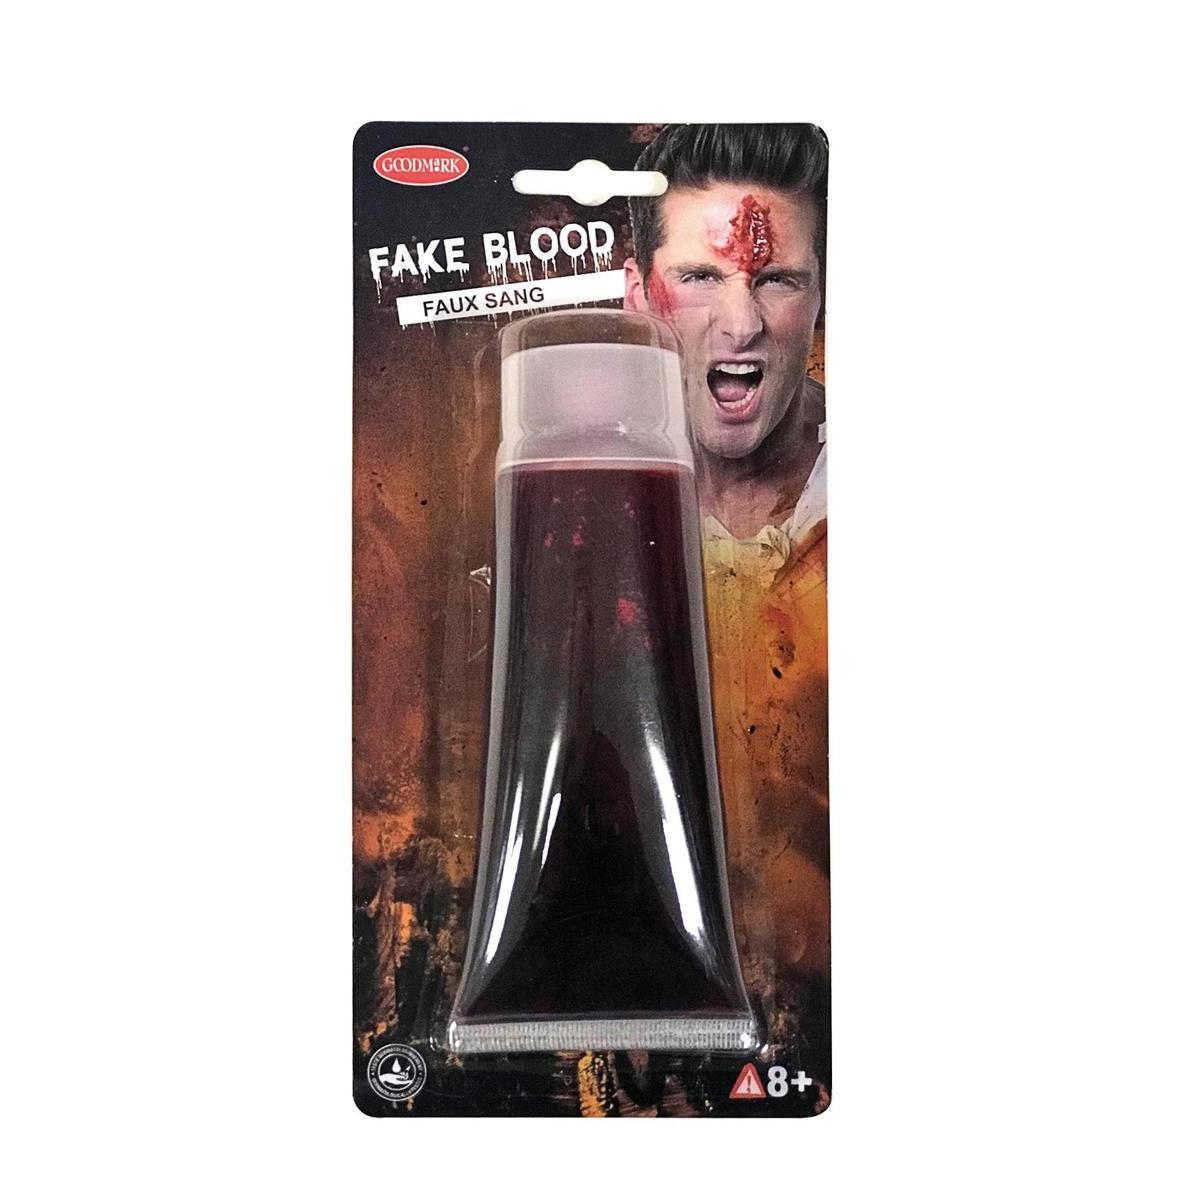 Faux sang - 100 ml - Rouge - GOODMARK